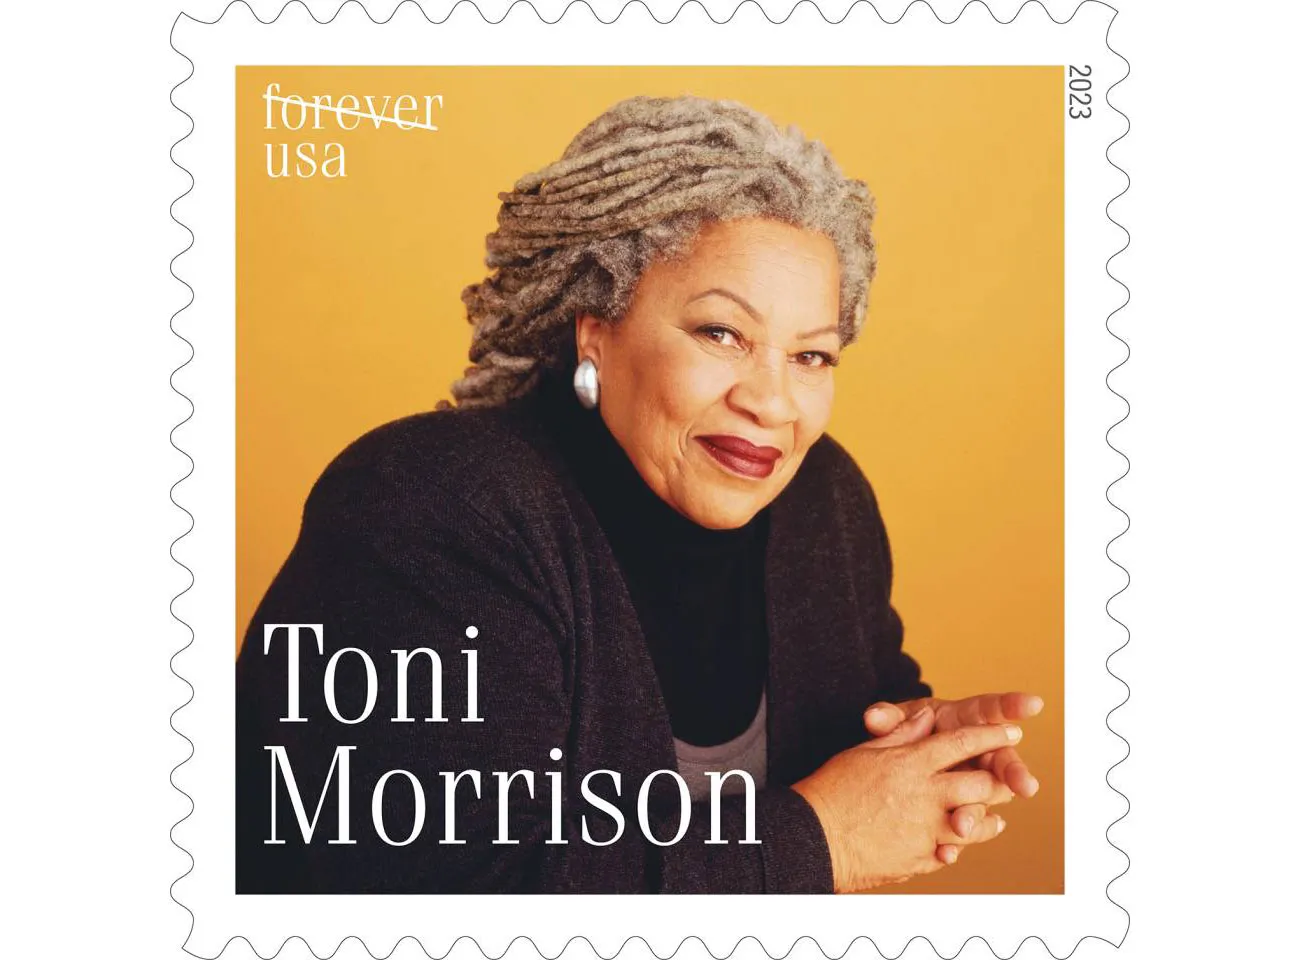 Postal Service Unveils Forever Stamp Honoring Toni Morrison